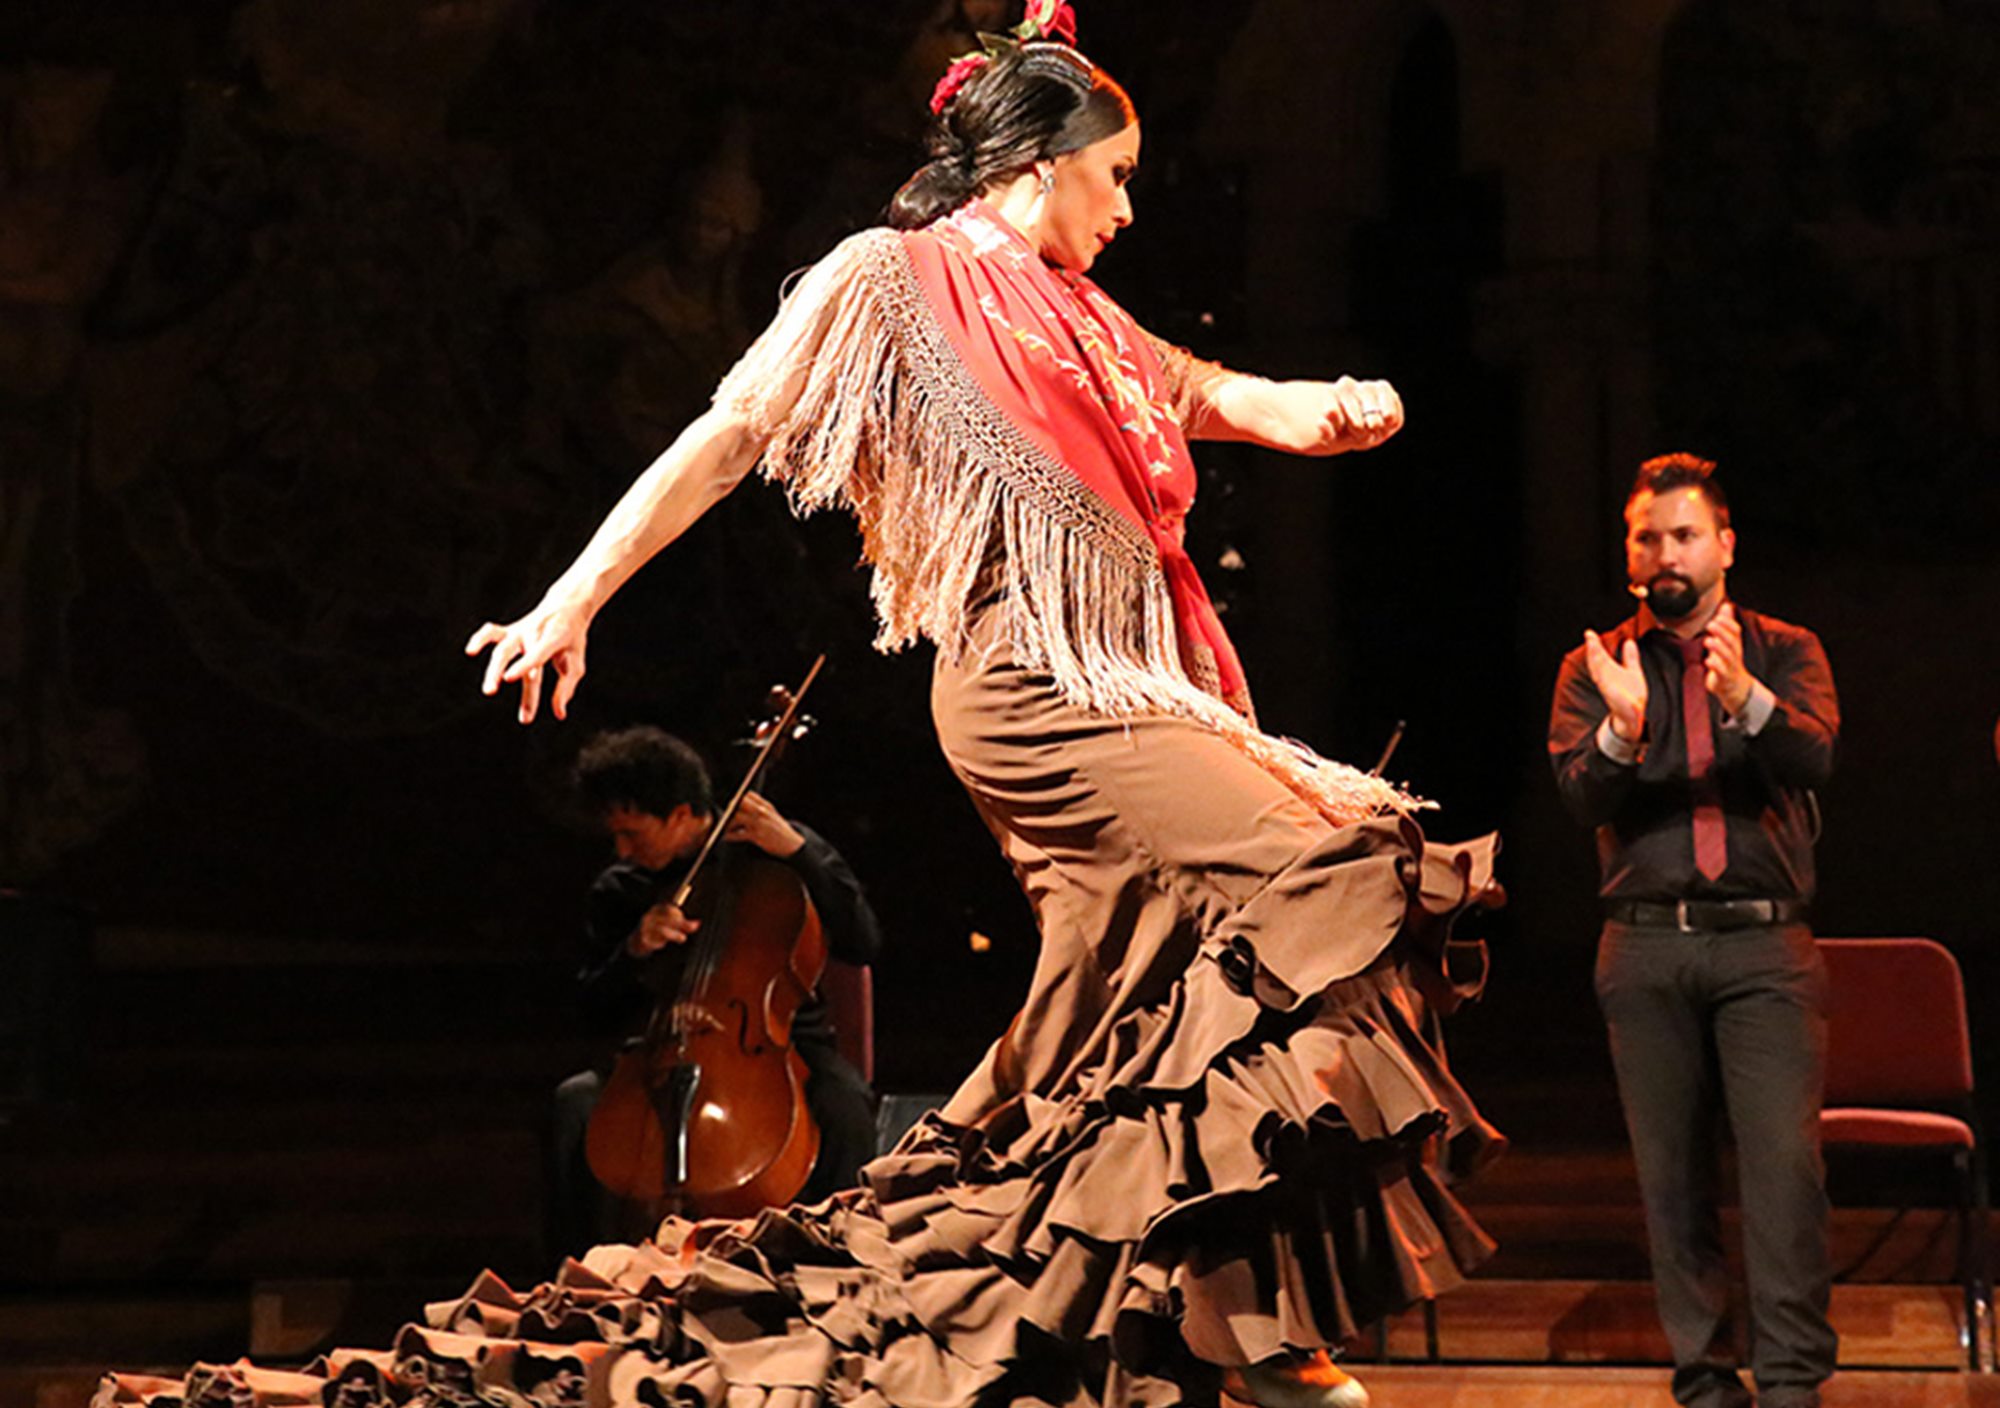 book Opera & Flamenco show in Palau barcelona